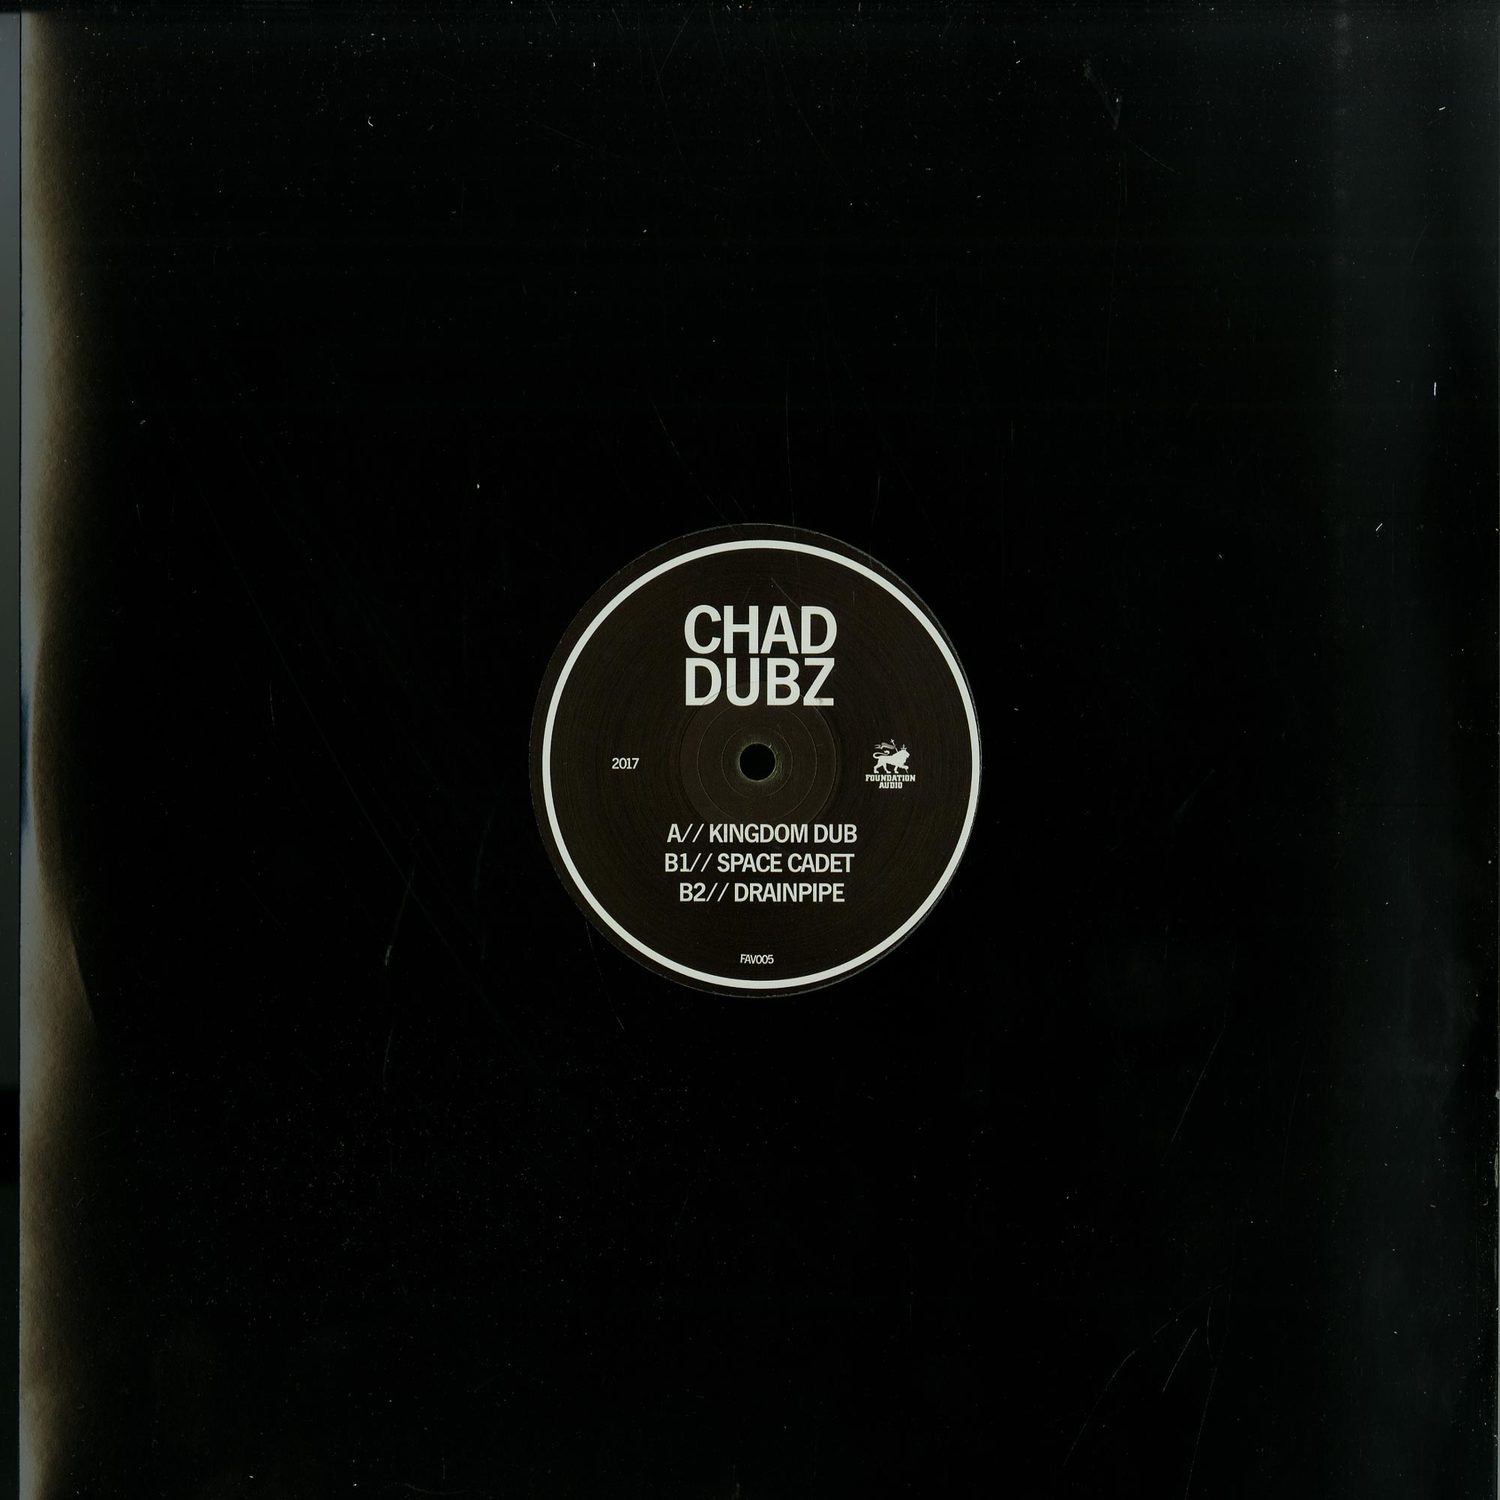 Chad Dubz - KINGDOM DUB EP